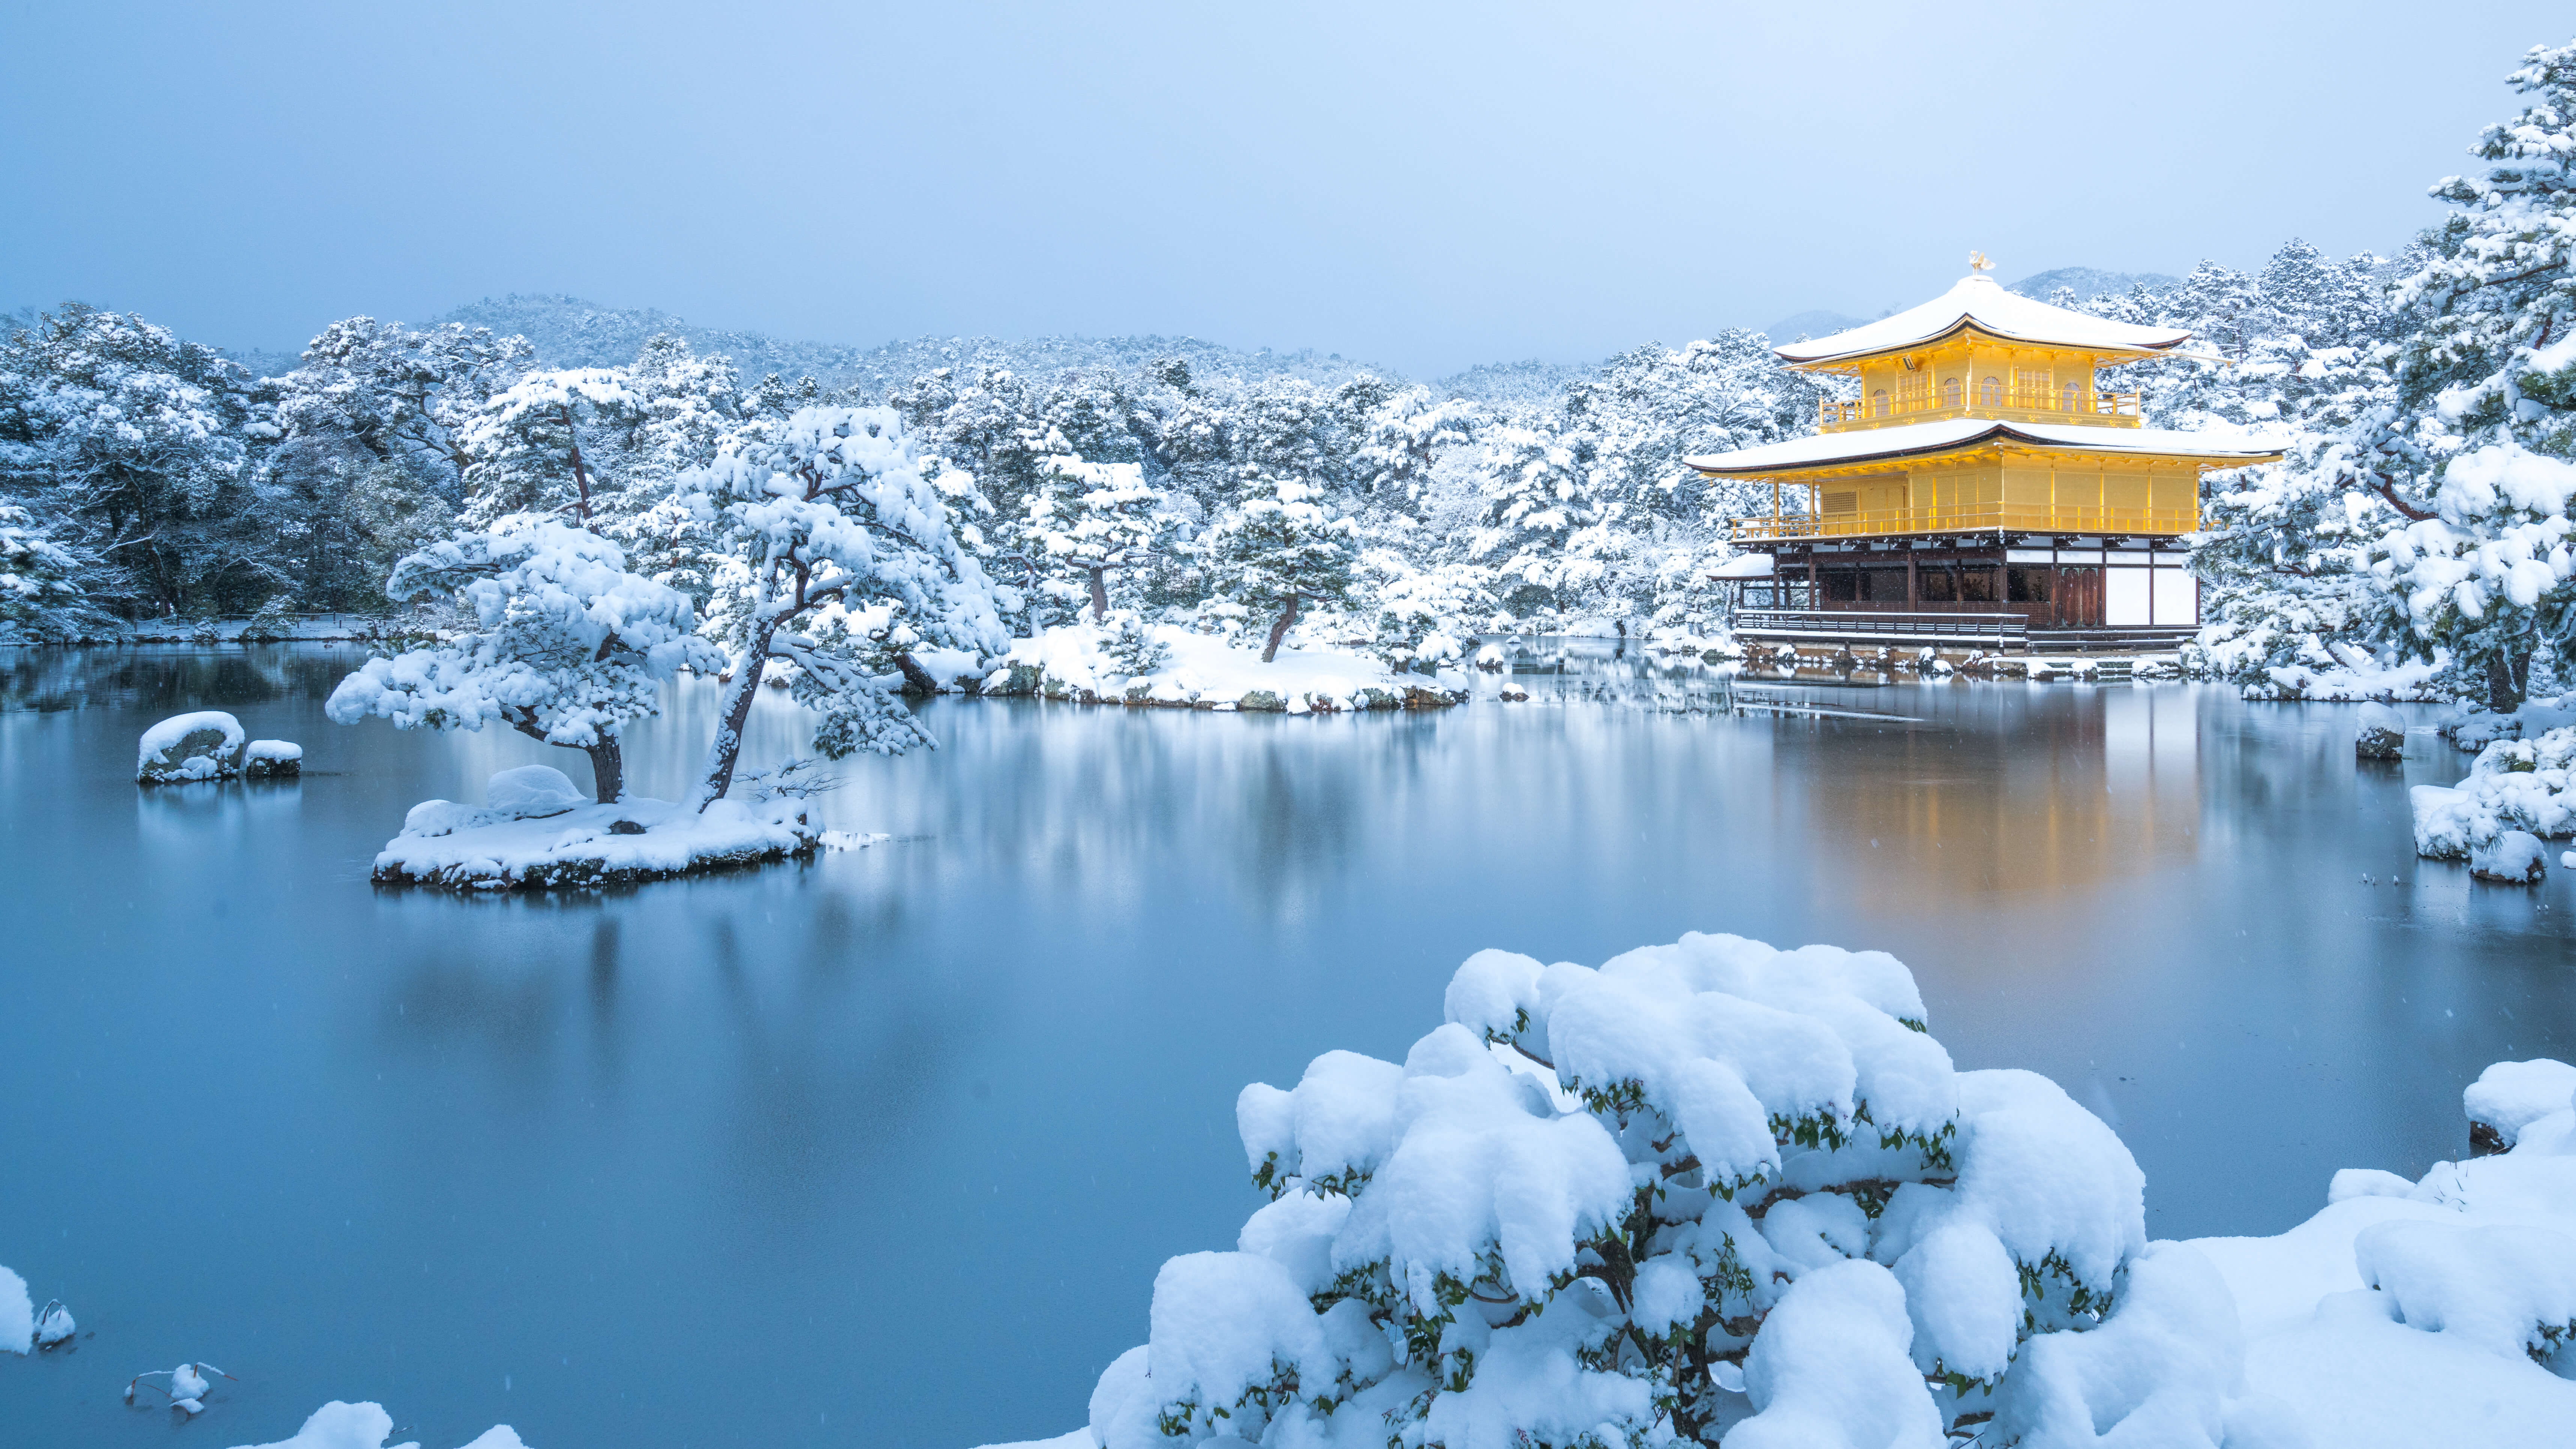 General 6865x3861 Japan Kyoto Kinkaku-ji winter nature lake snow Asia water cold ice building trees